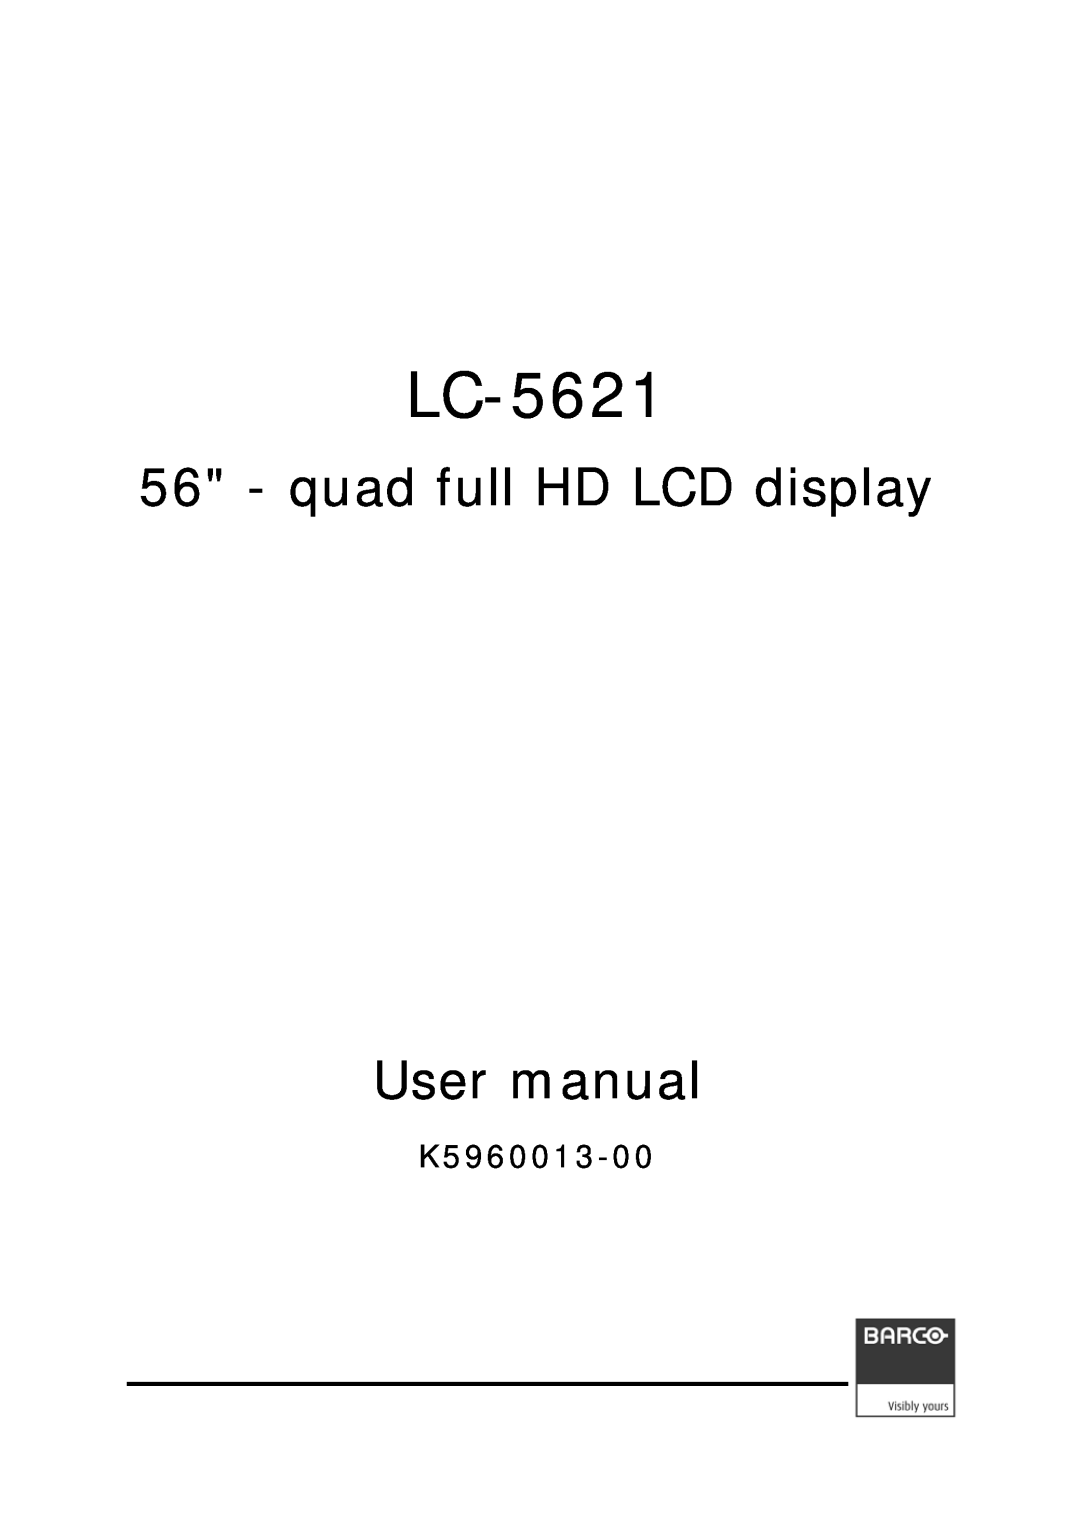 Barco LC-5621 user manual quad full HD LCD display User manual, K5960013-00 